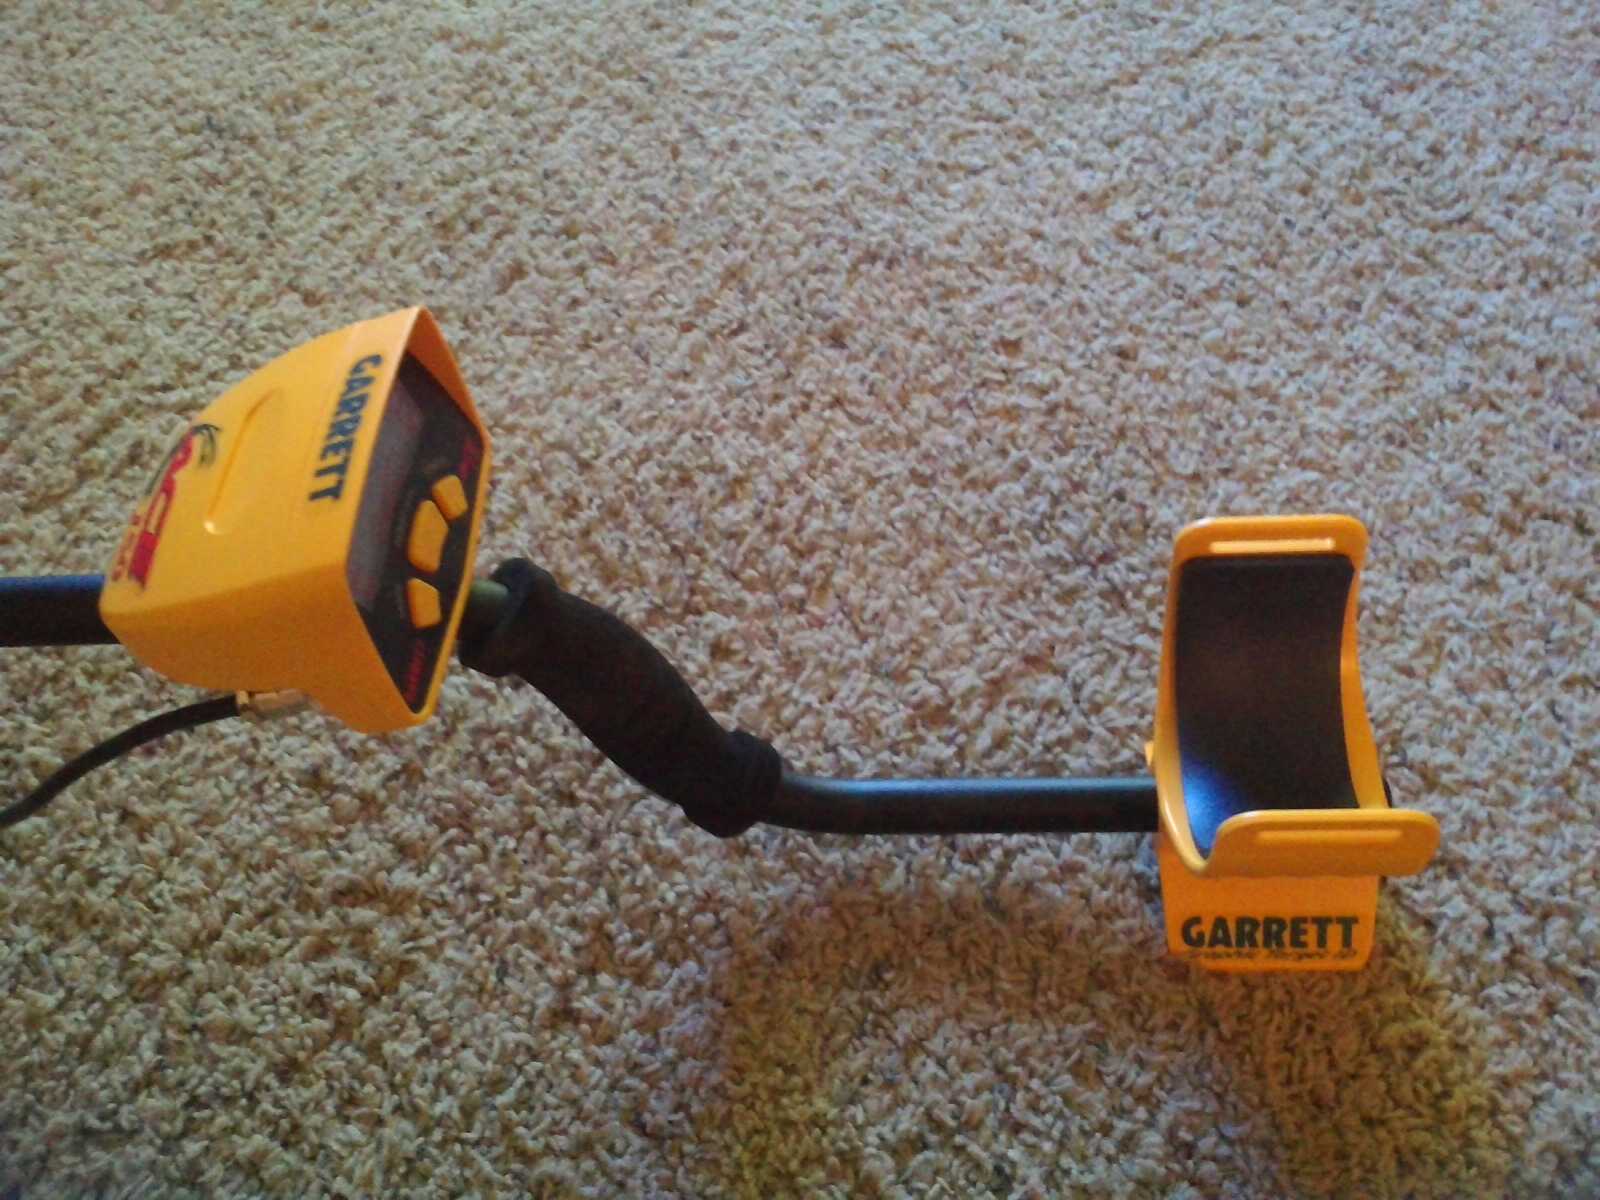 My review of the Garrett ace 150 metal detector